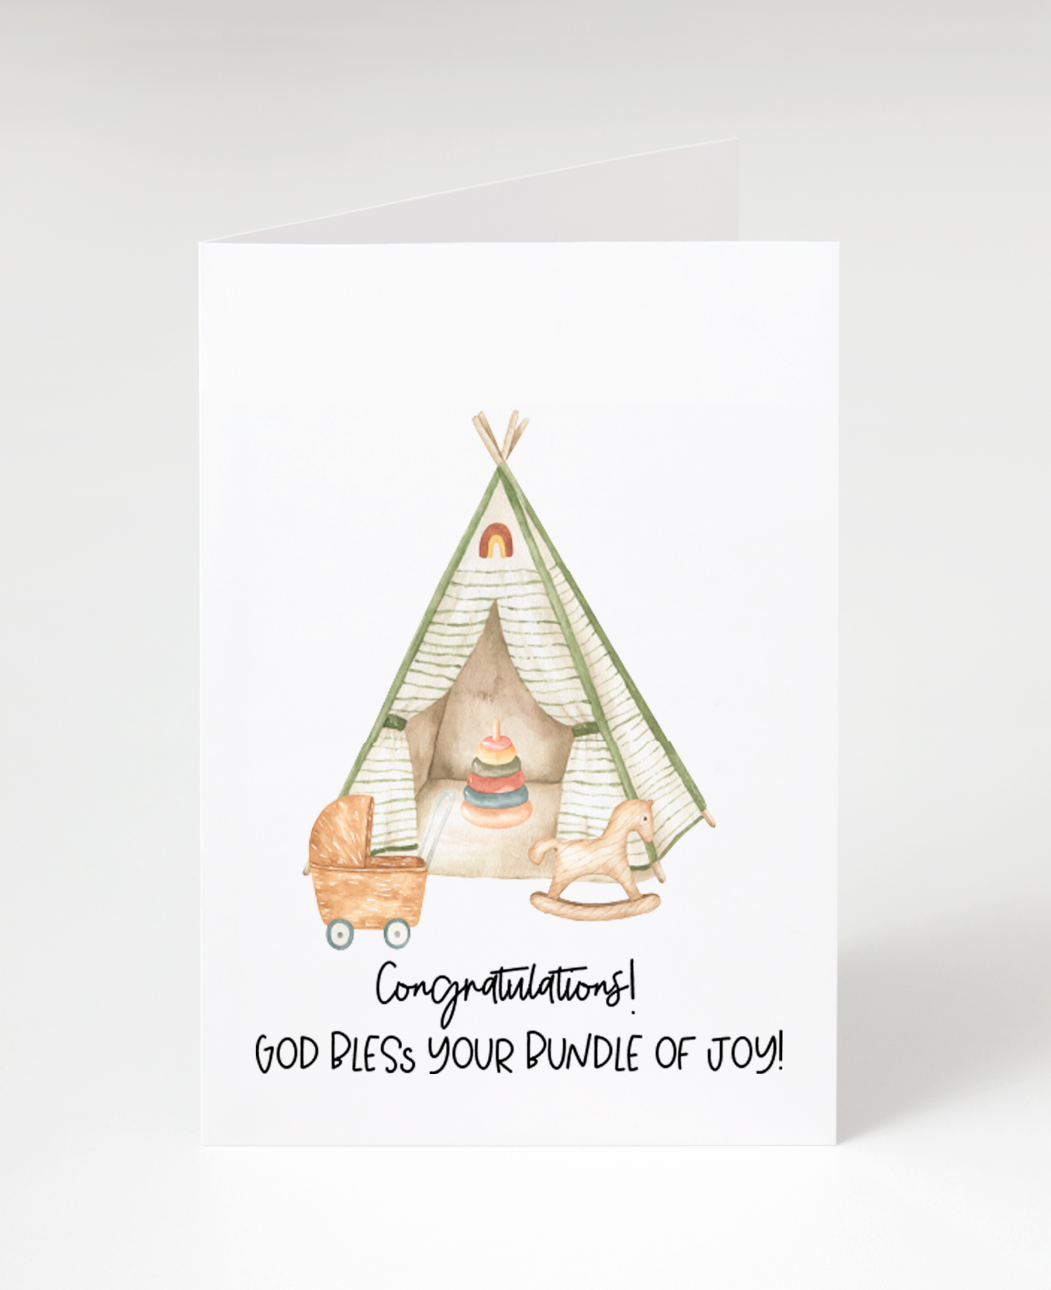 Congratulations - God bless your bundle of joy card